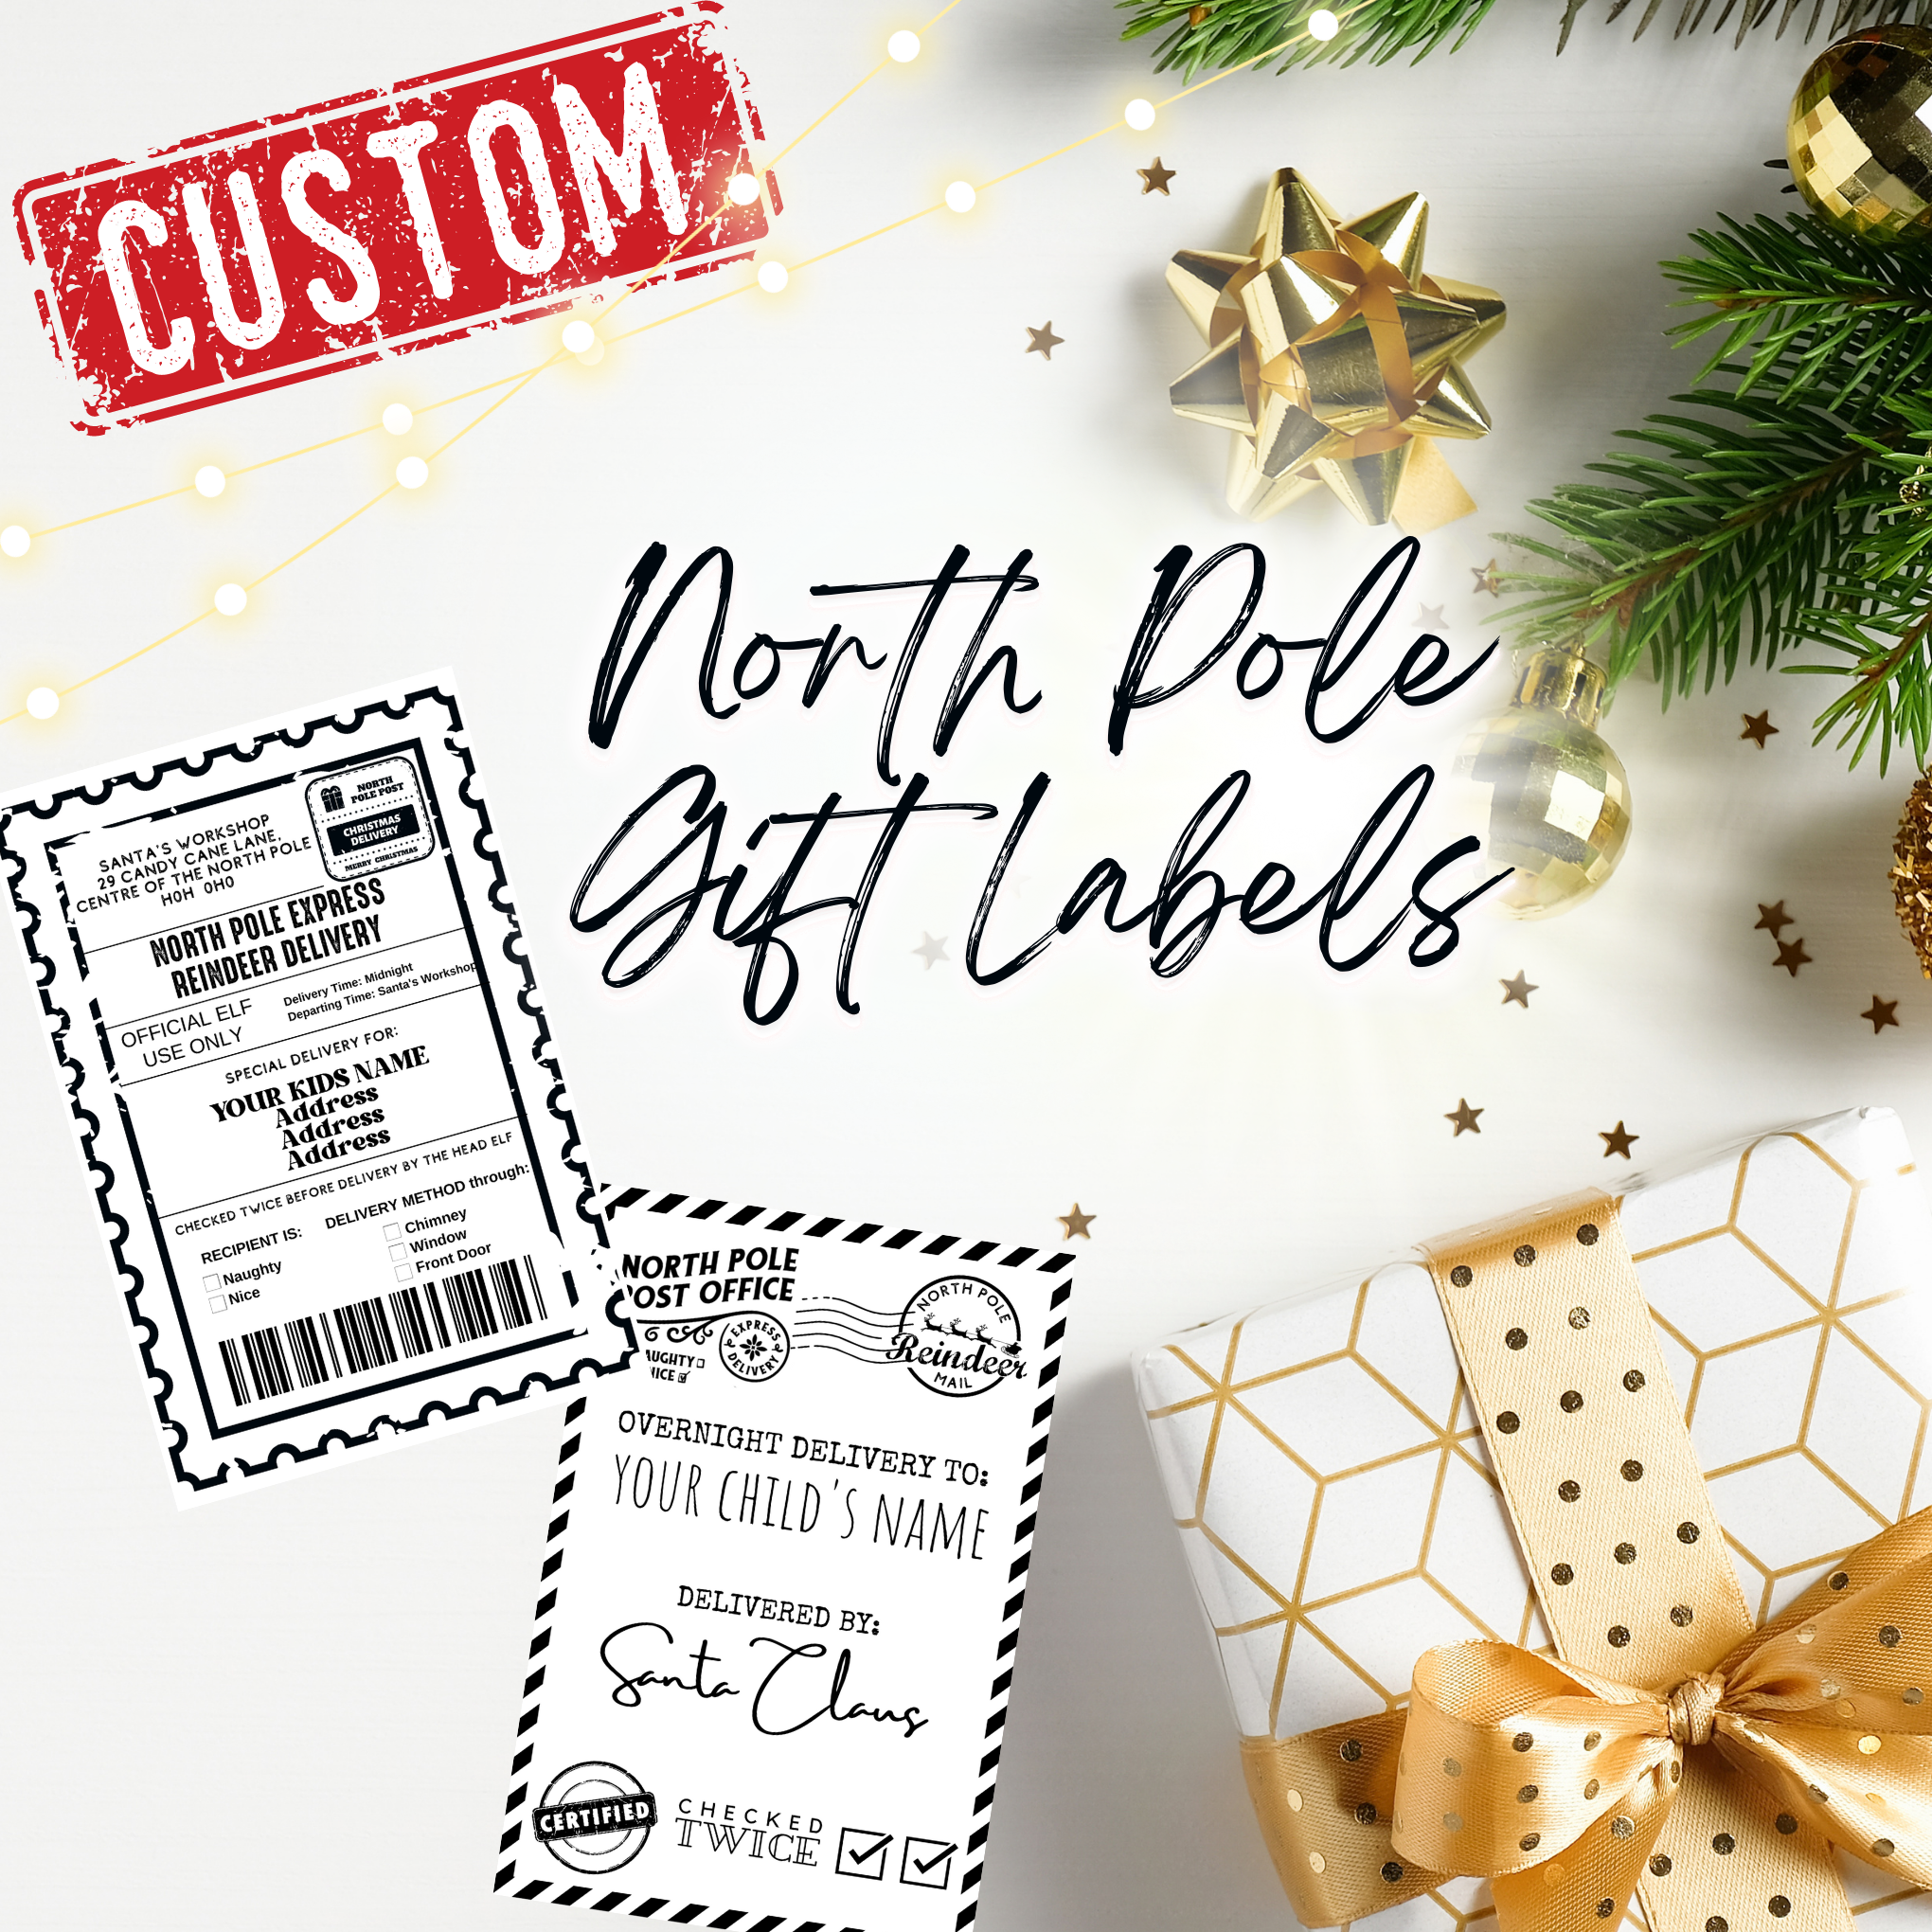 CUSTOM North Pole Gift Labels!